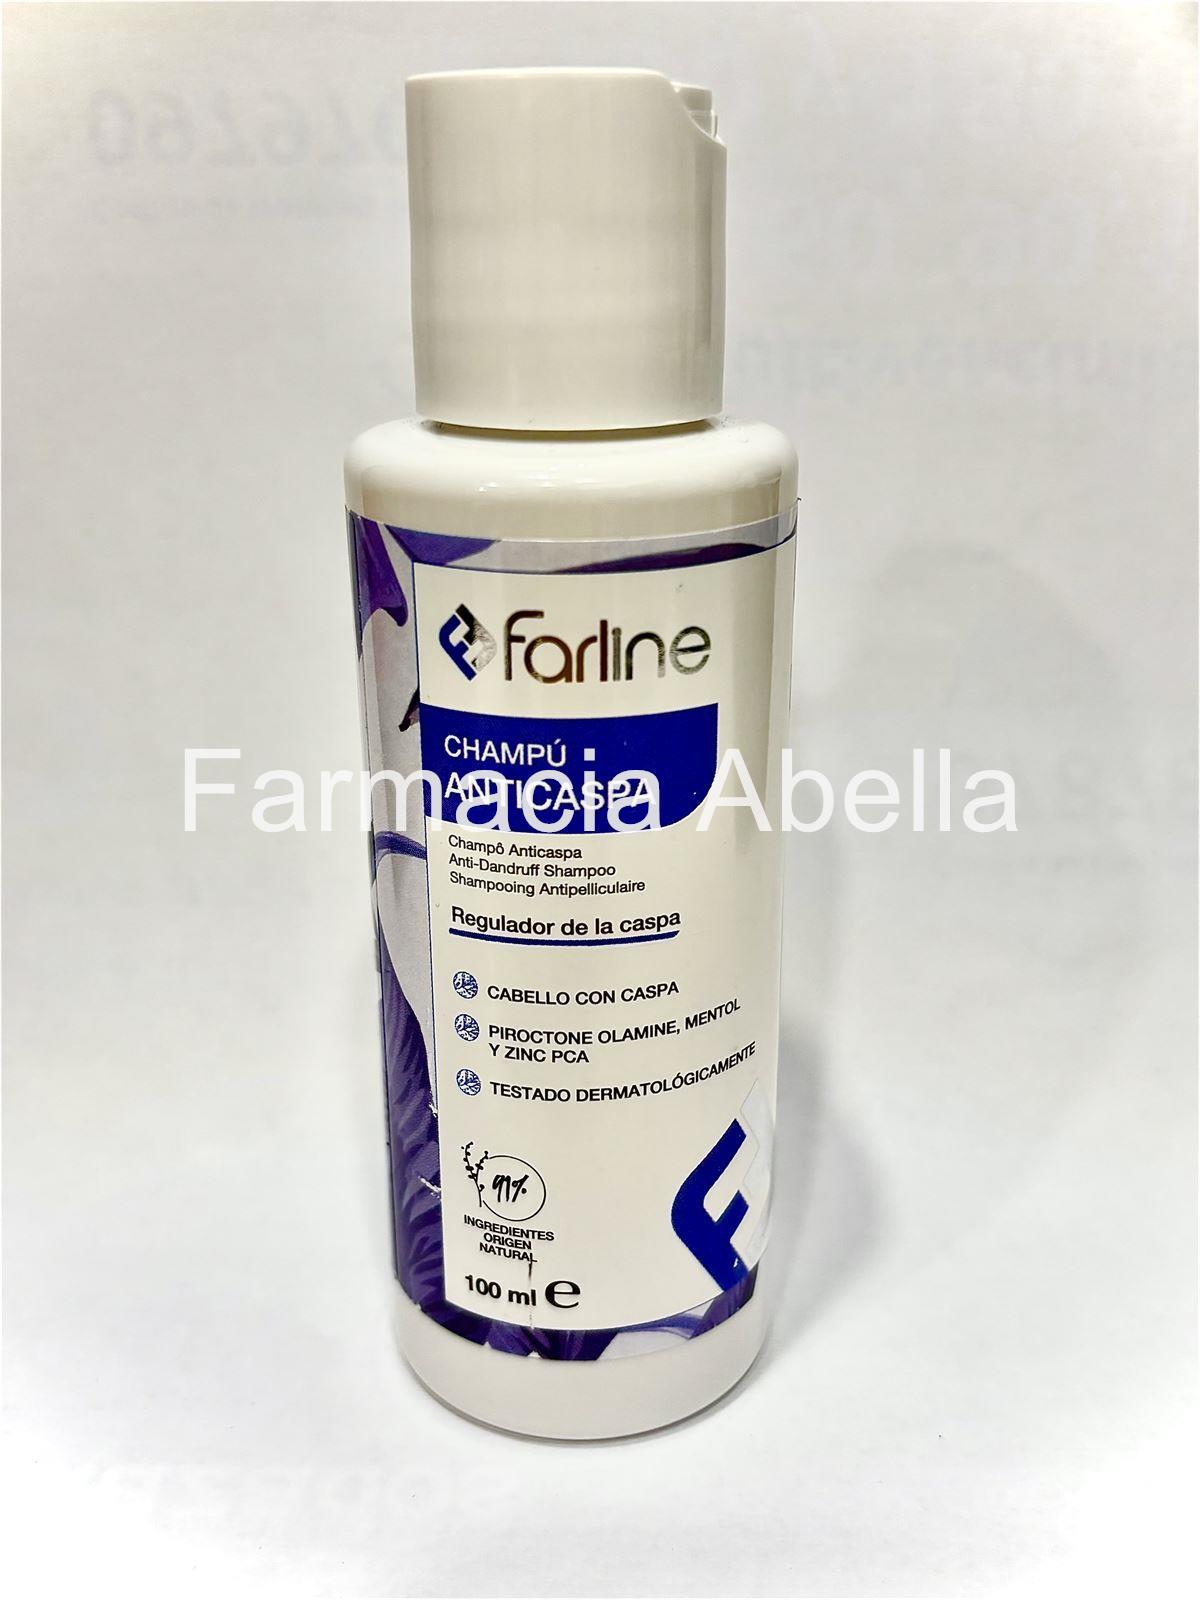 Farline champú anticaspa 100 ml - Imagen 1